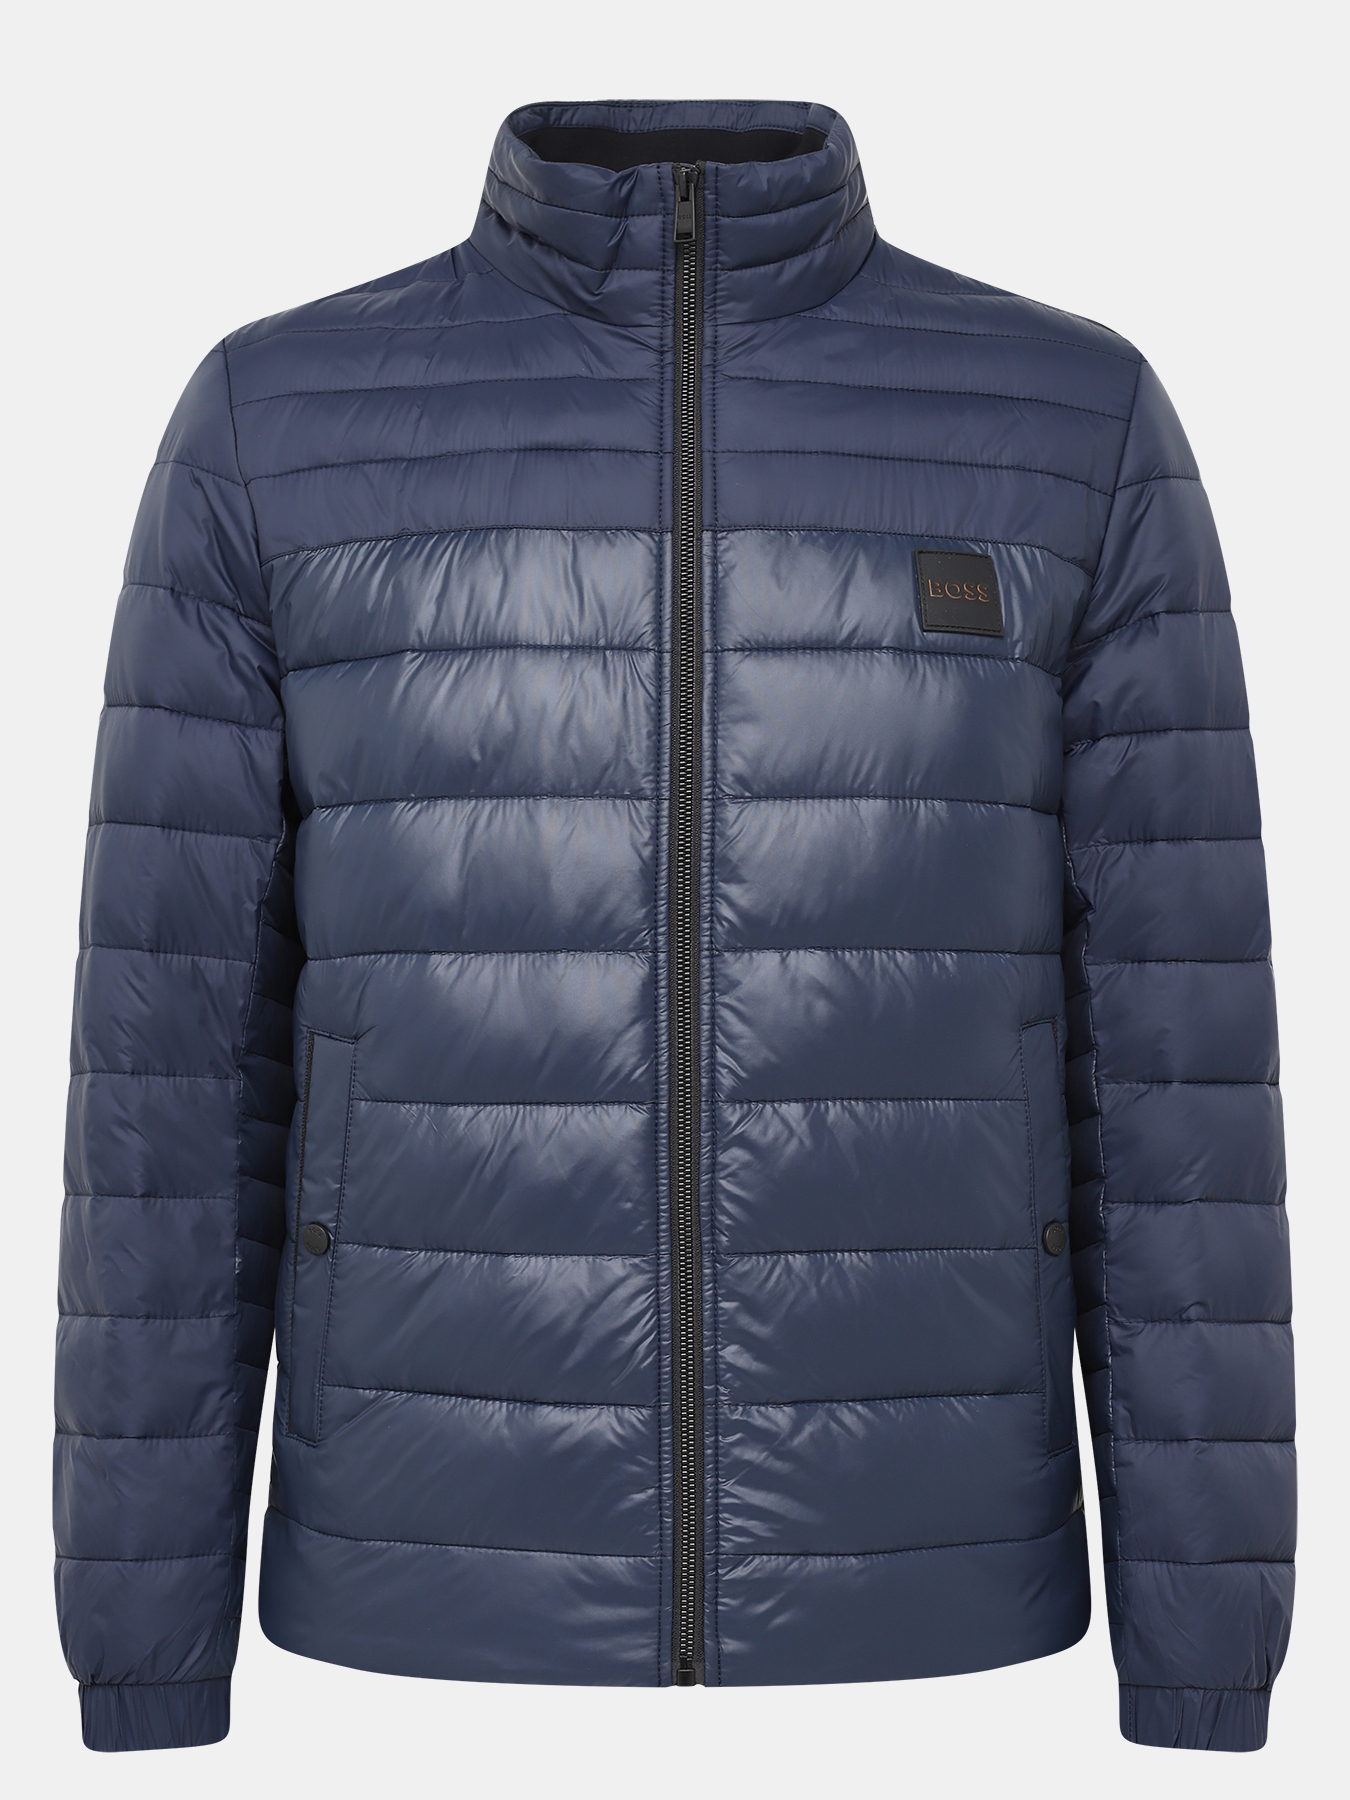 Куртка Oden BOSS 420447-025, цвет синий, размер 48 - фото 1